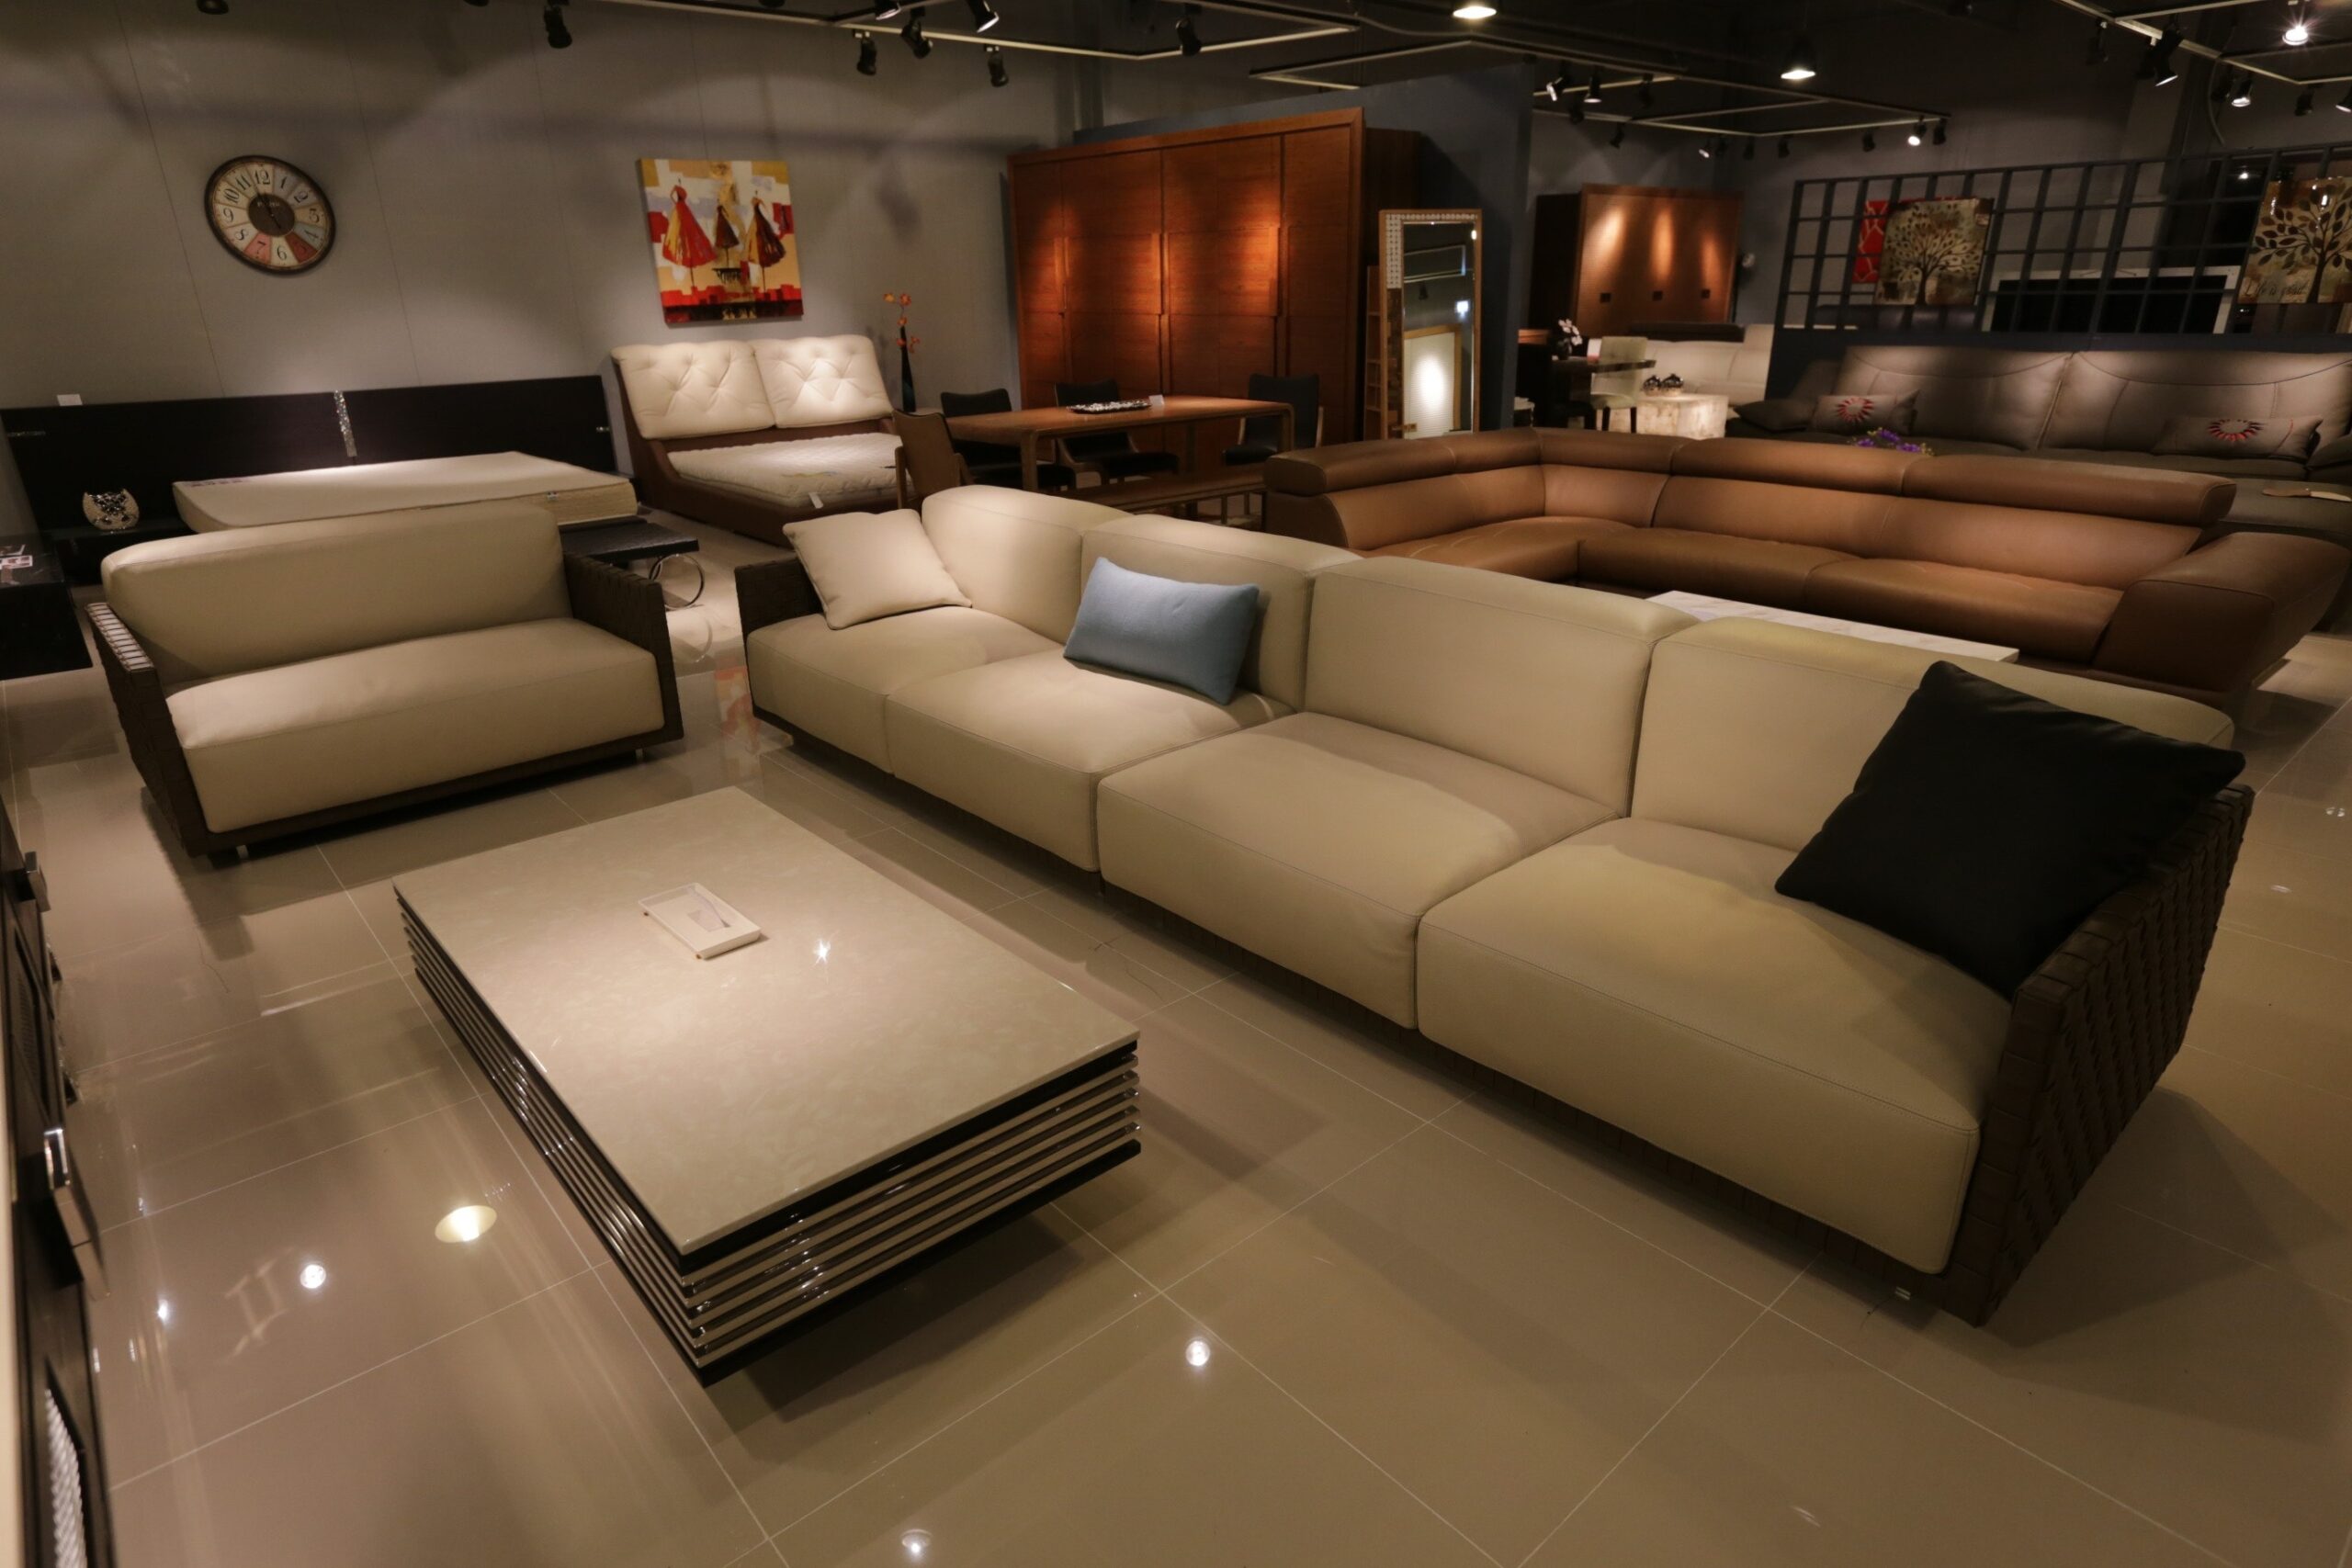 Best lighting ideas for your living room